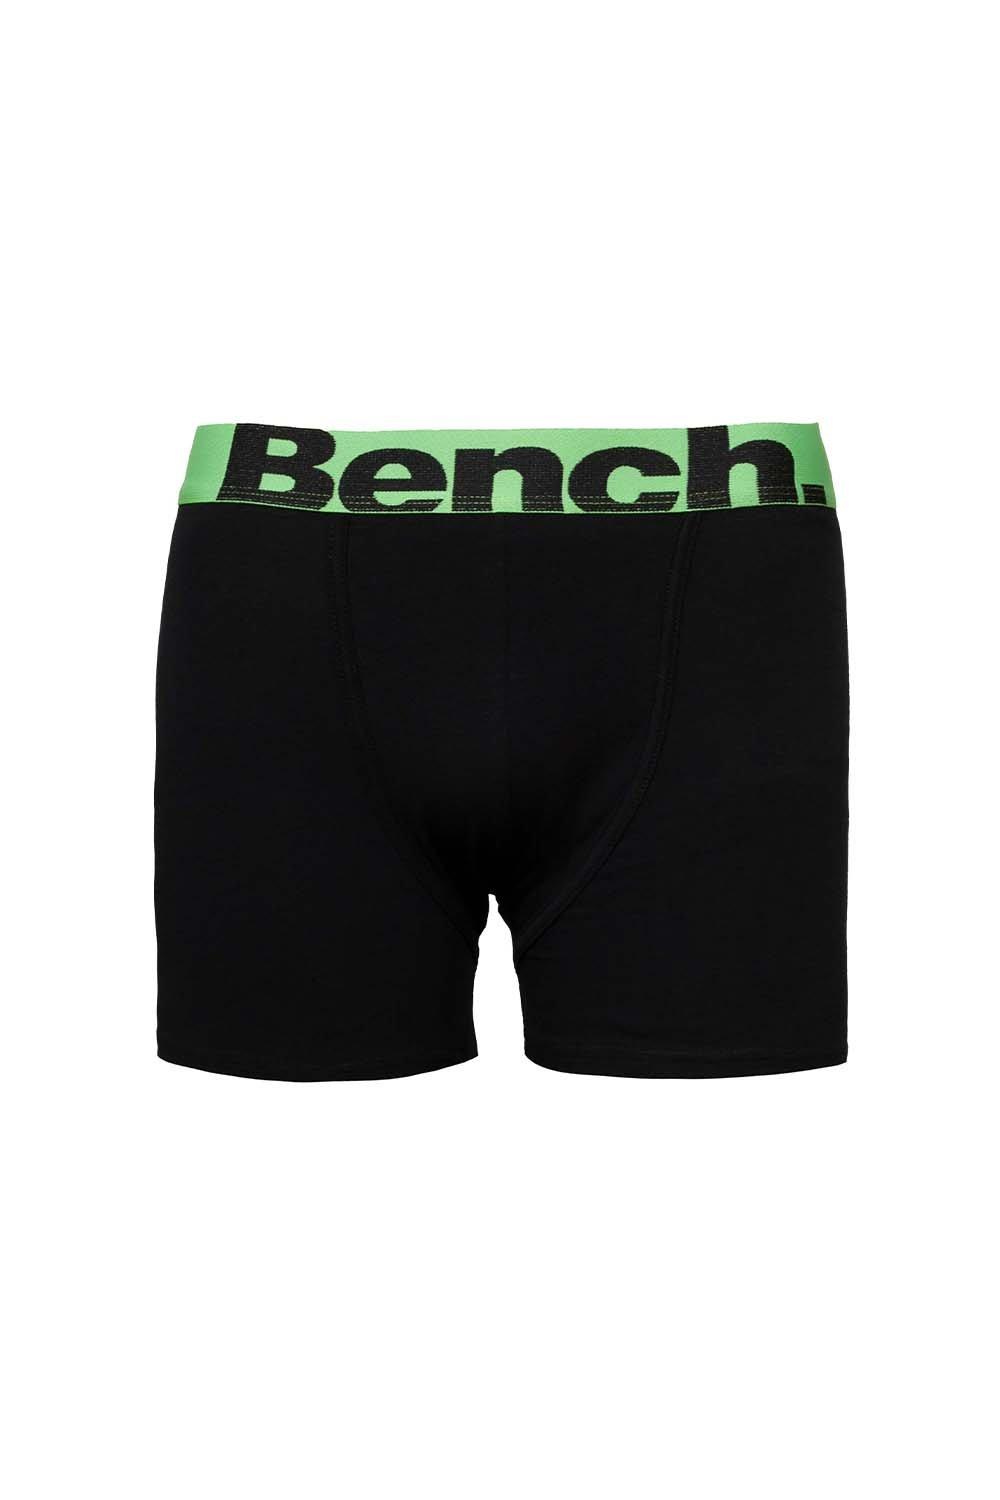 Bench 7 Pack Diego Mens Designer Boxer Shorts / Trunks in Black with  Coloured Bands - Bennetts Direct Ltd